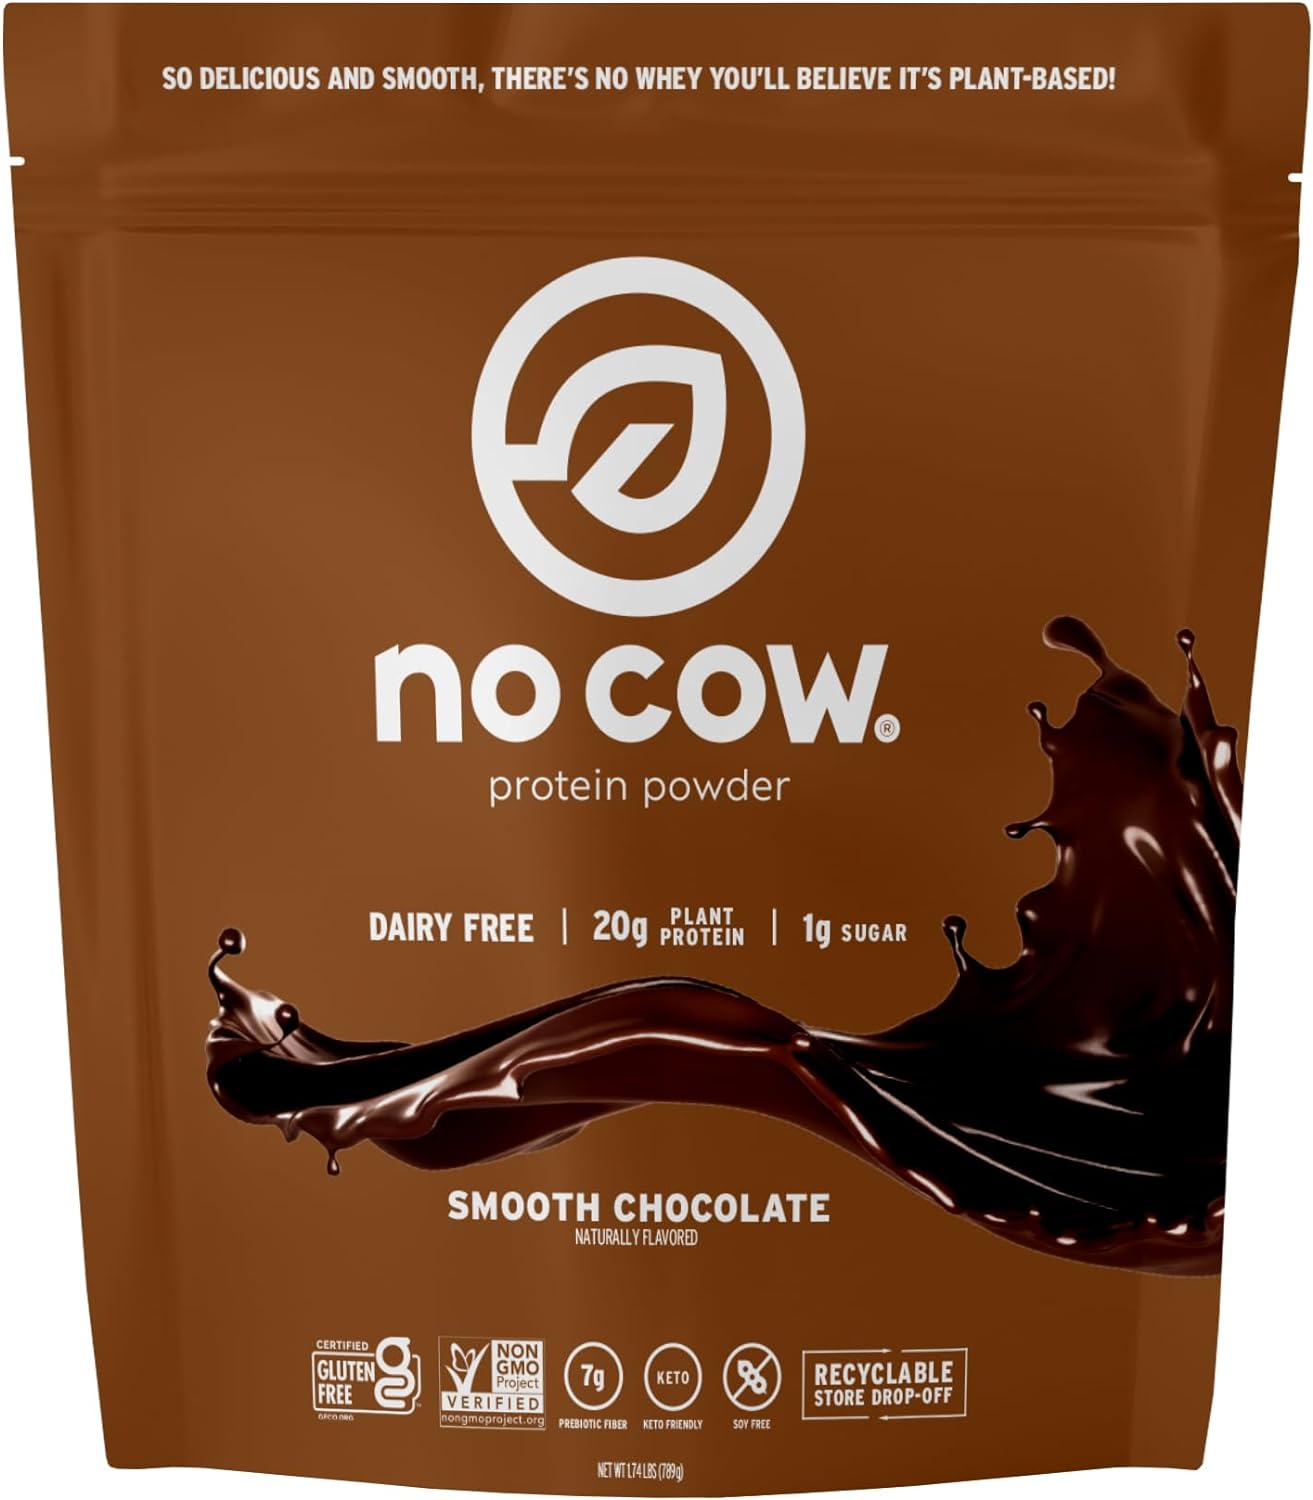 No Cow Vegan Protein Powder, Chocolate, 20g Plant Based Protein, Recyc